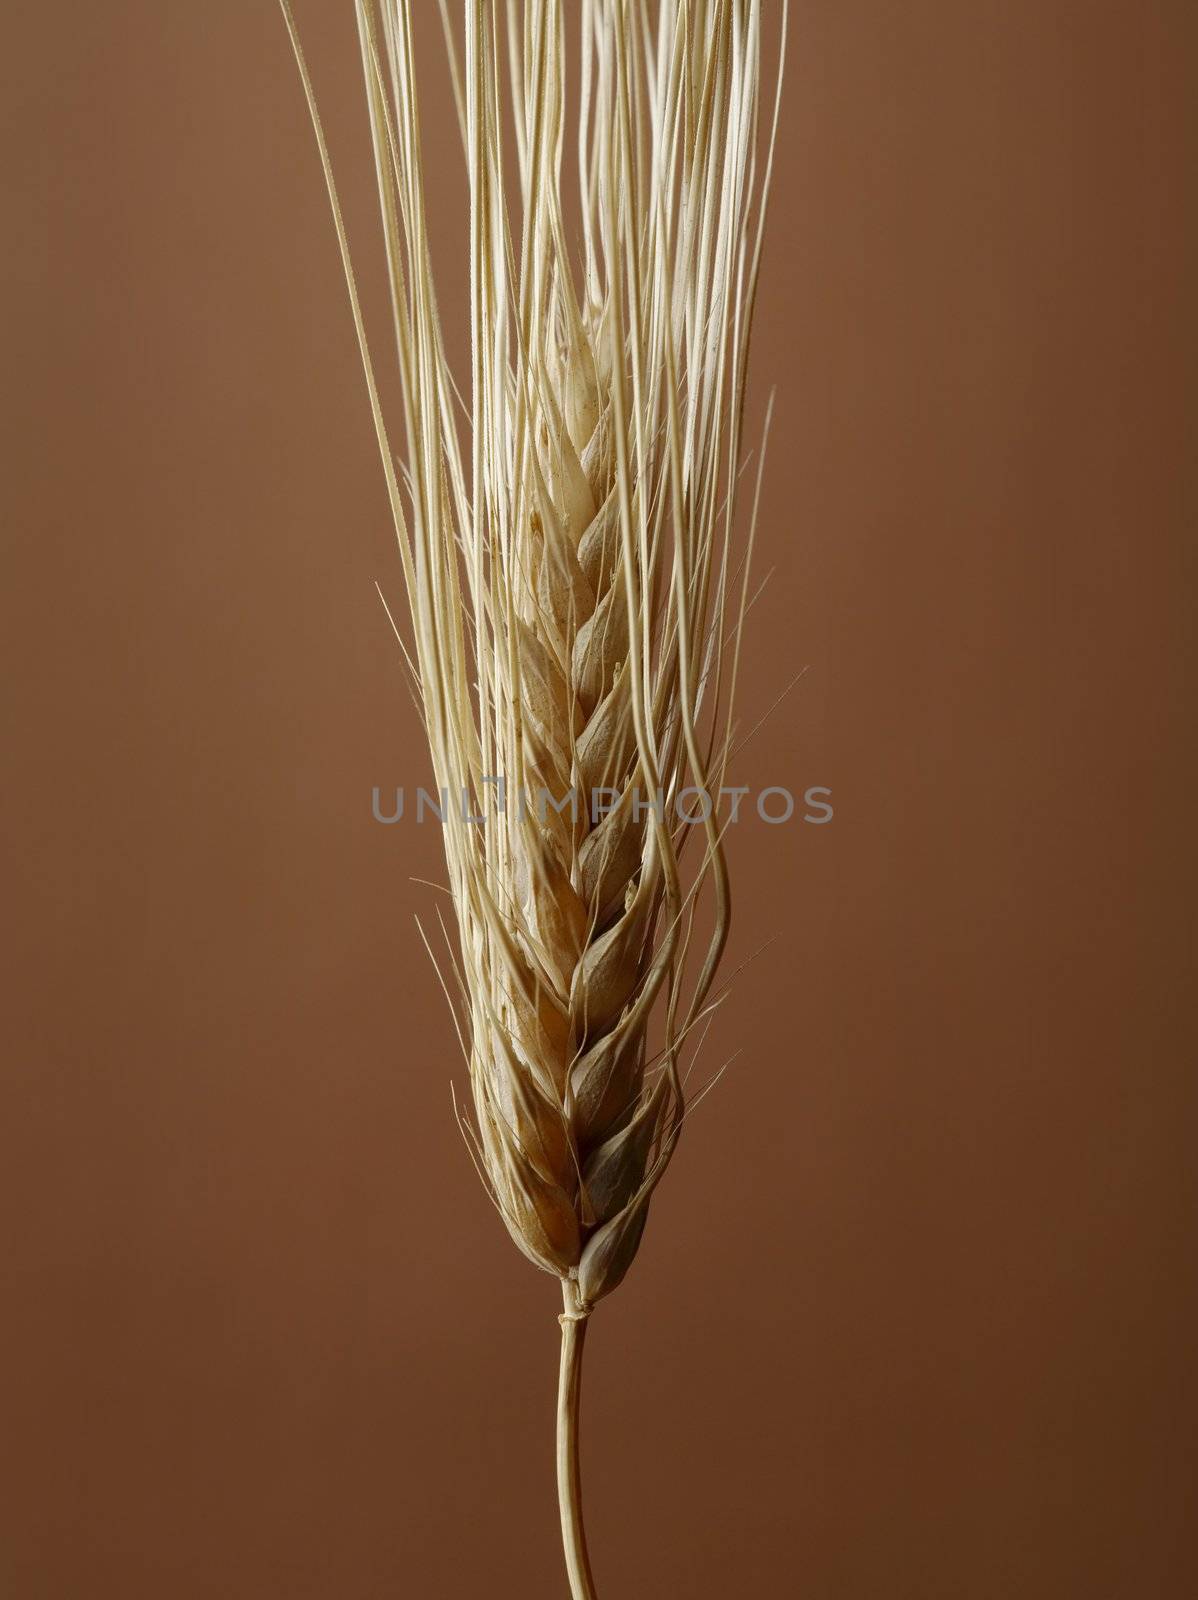 Barley by Stocksnapper